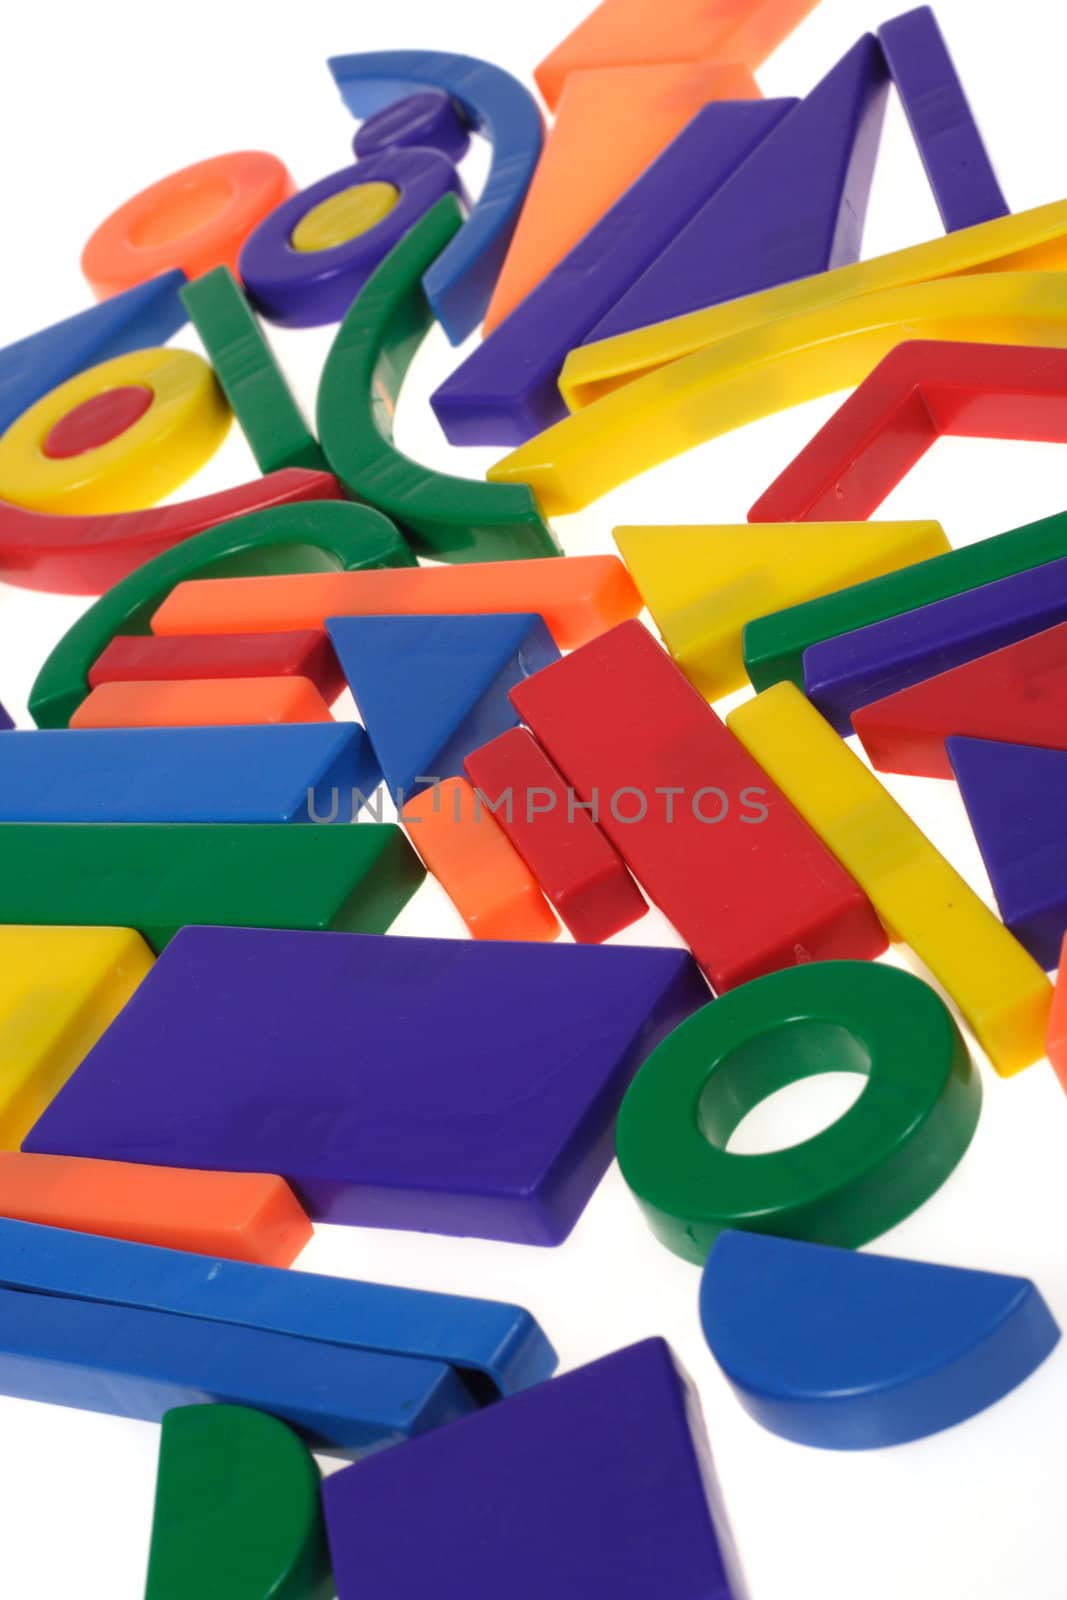 Plastic blocks geometrical figures photo on white background